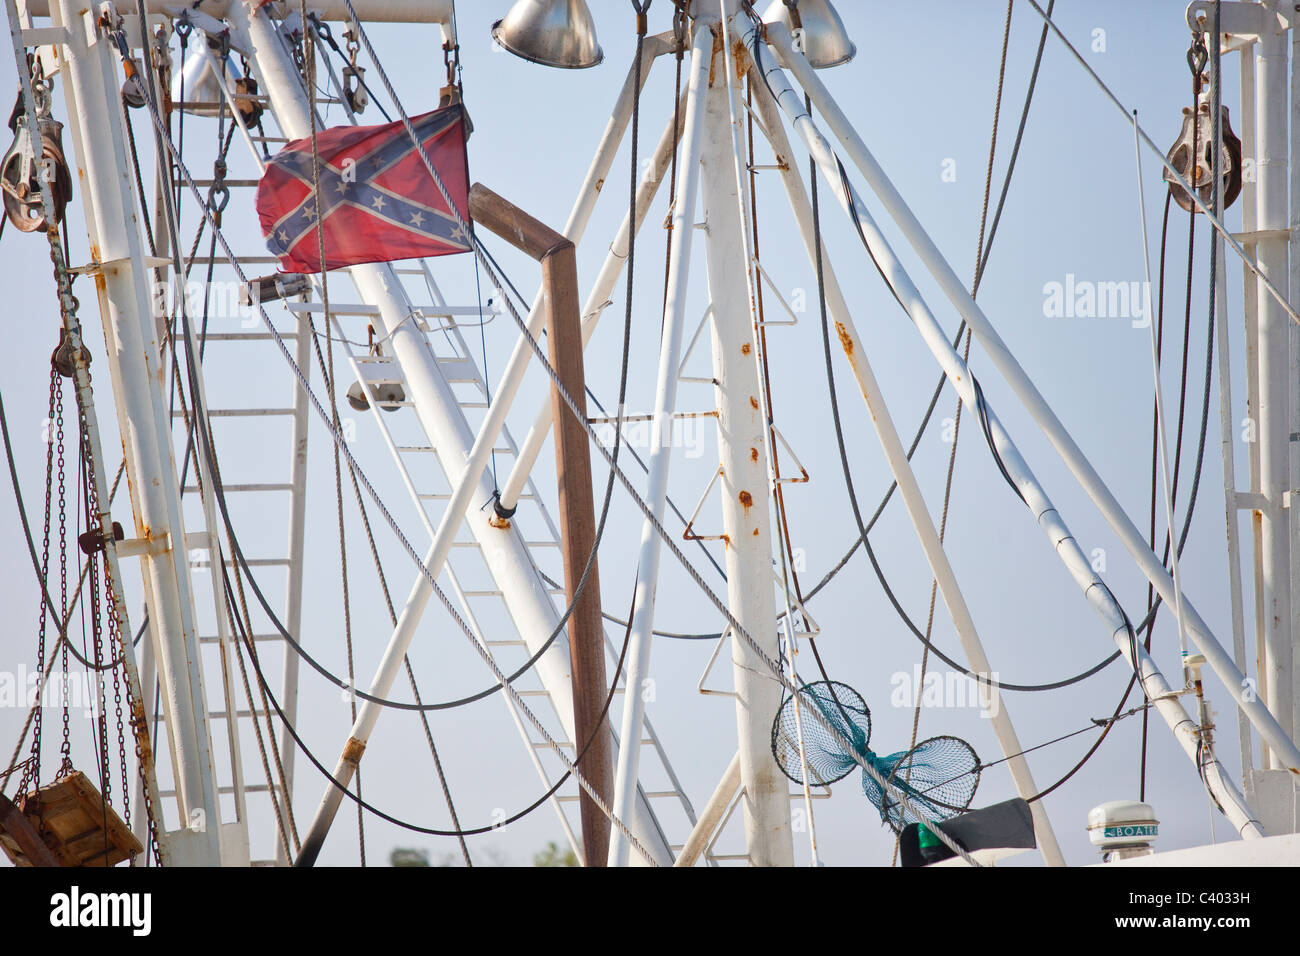 Confederate flag in the riggins of a crab boat in dock in Hampton, Virginia Stock Photo